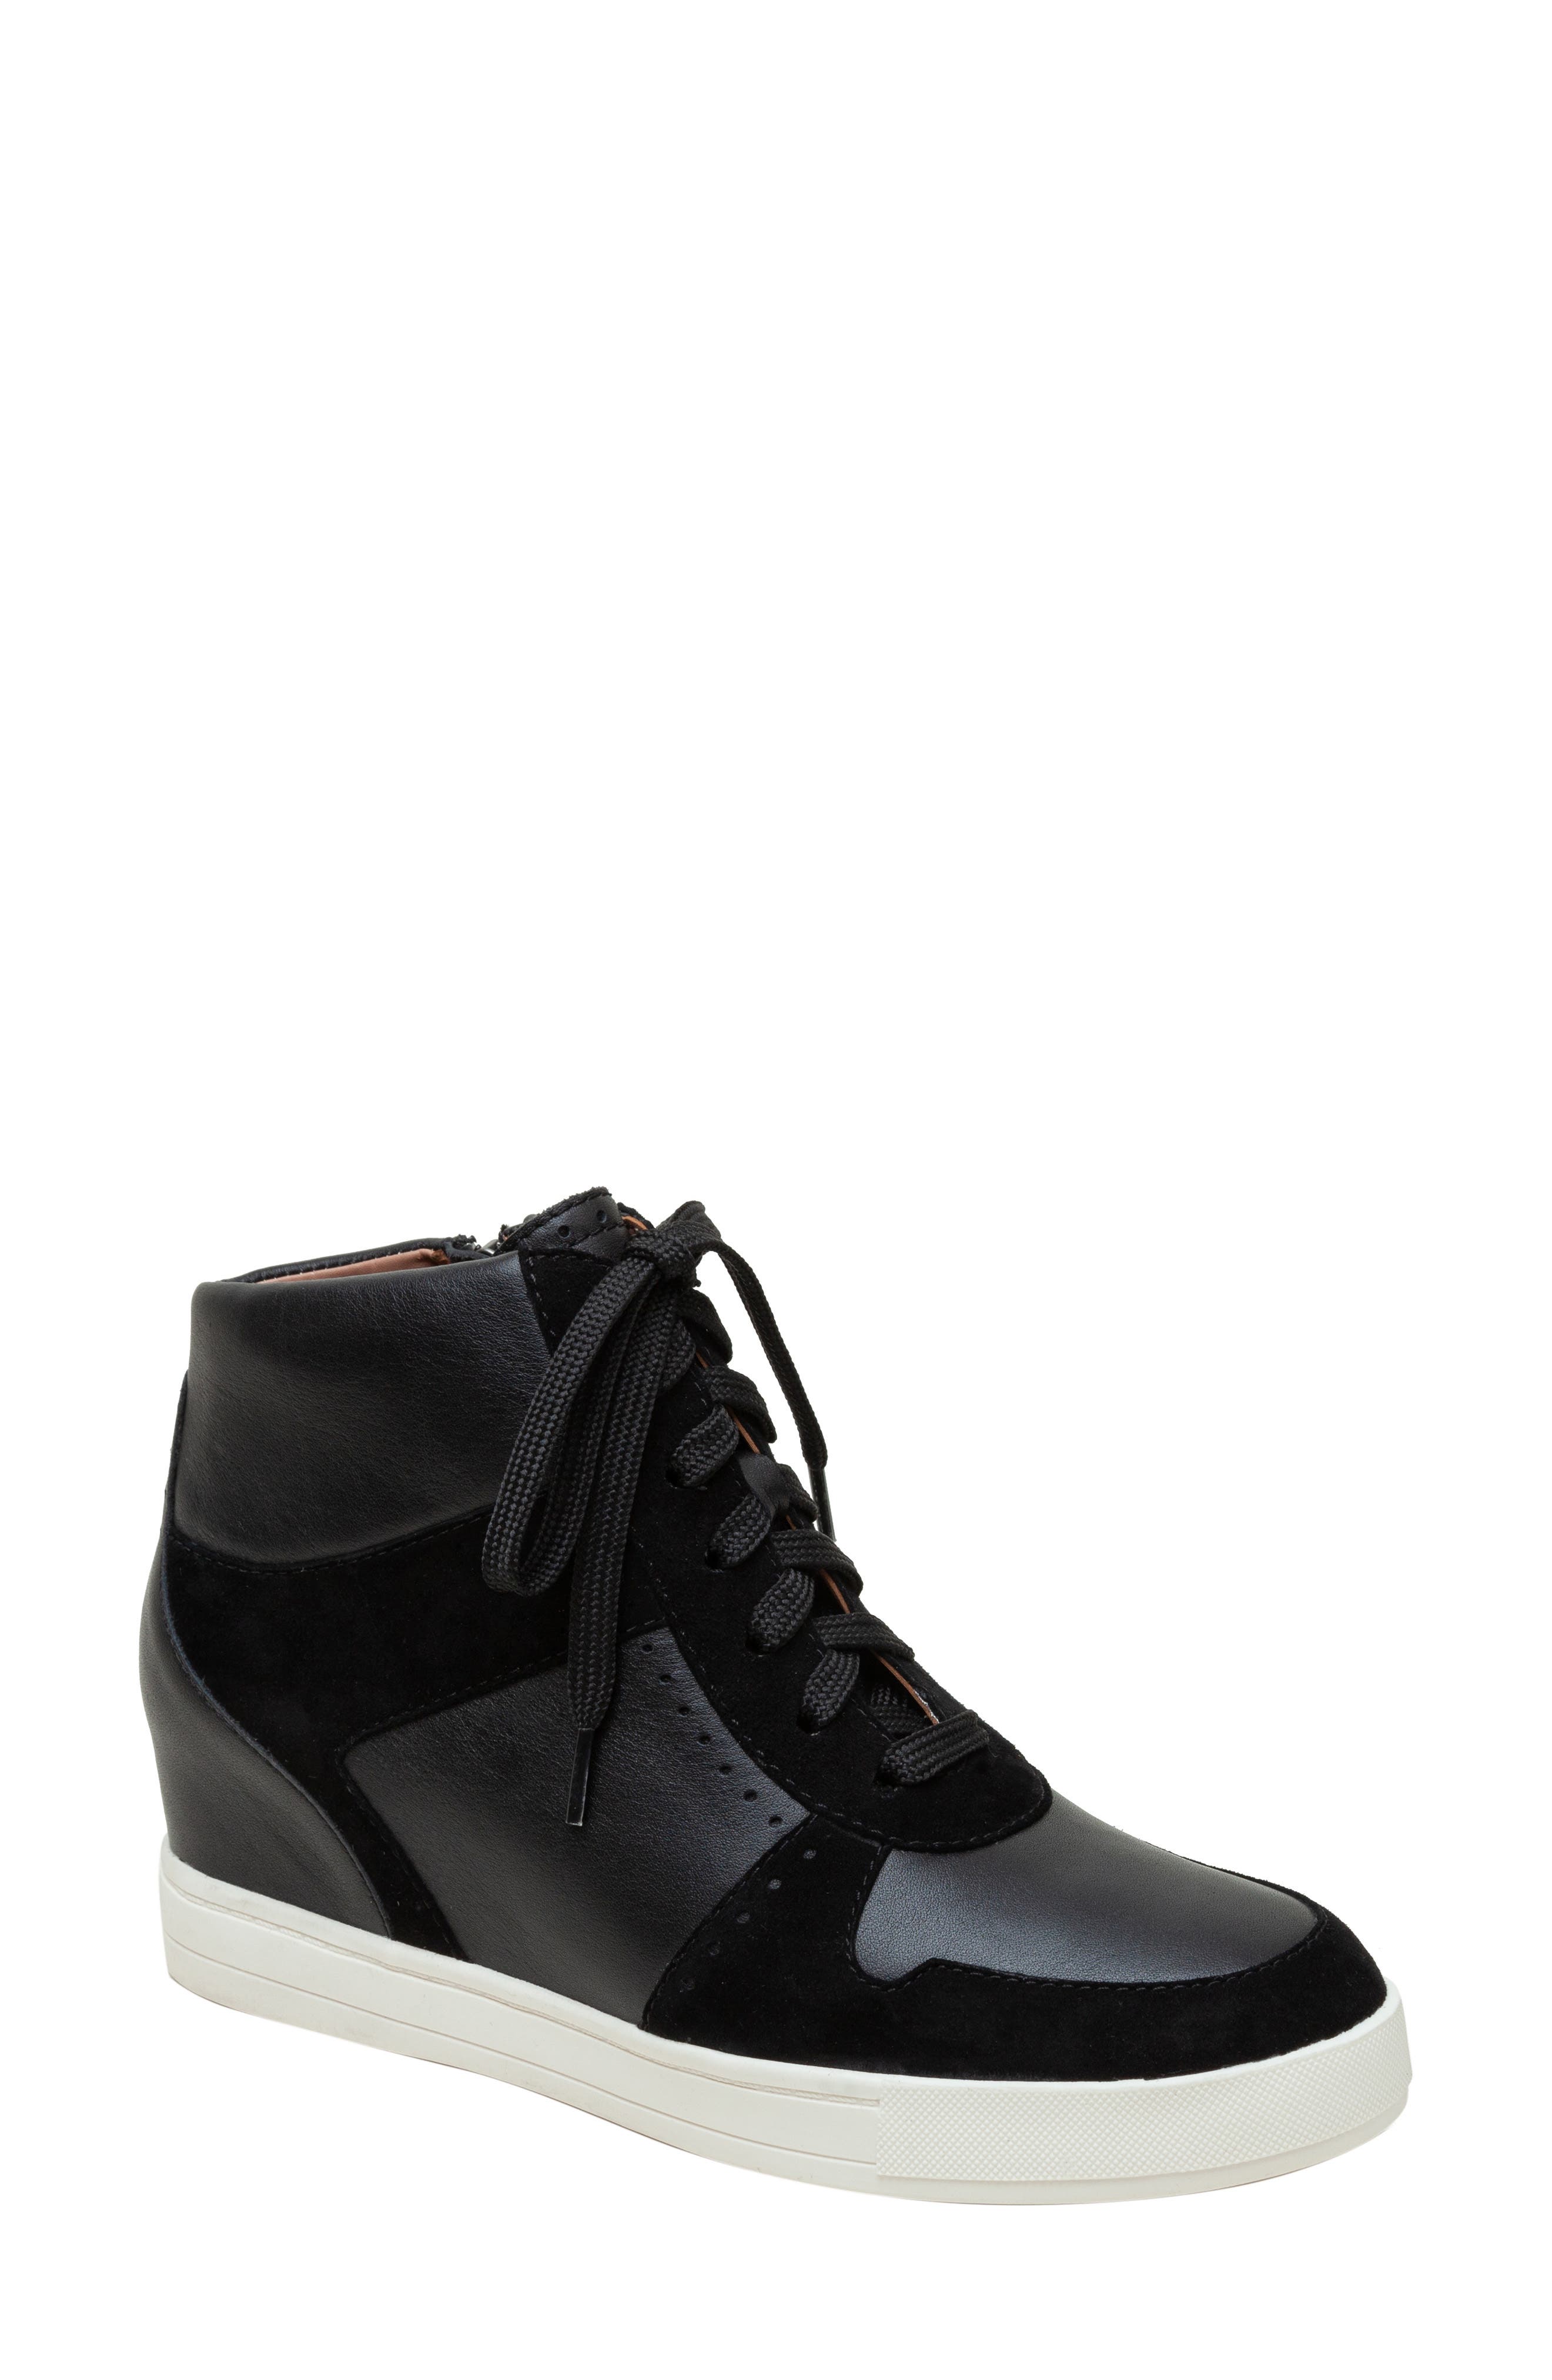 Jordan quilted hi-top sneakers - Black